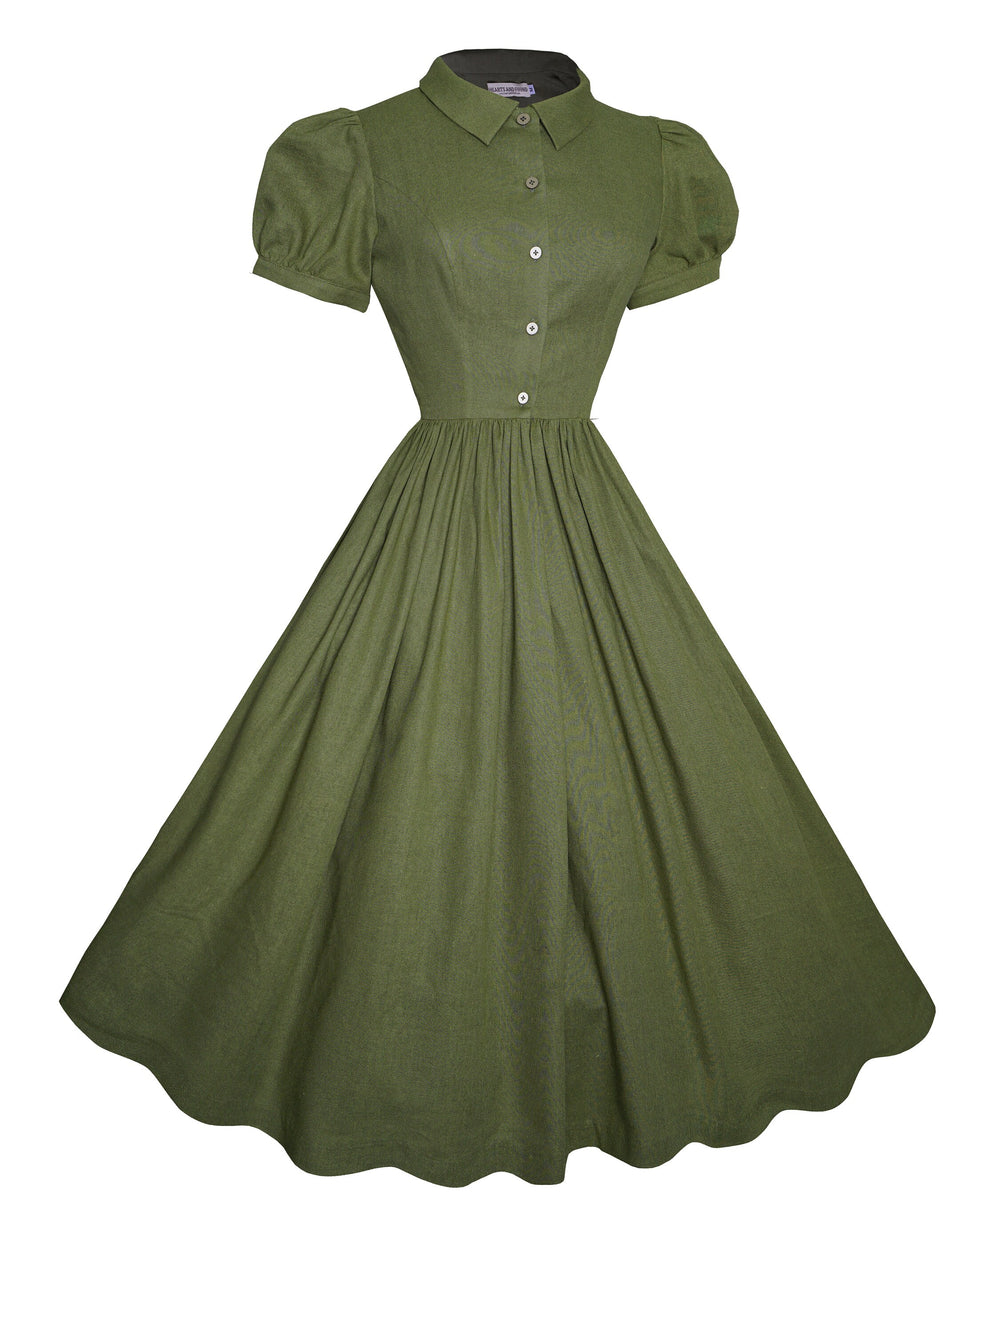 MTO - Judy Dress in Hunters Green Linen